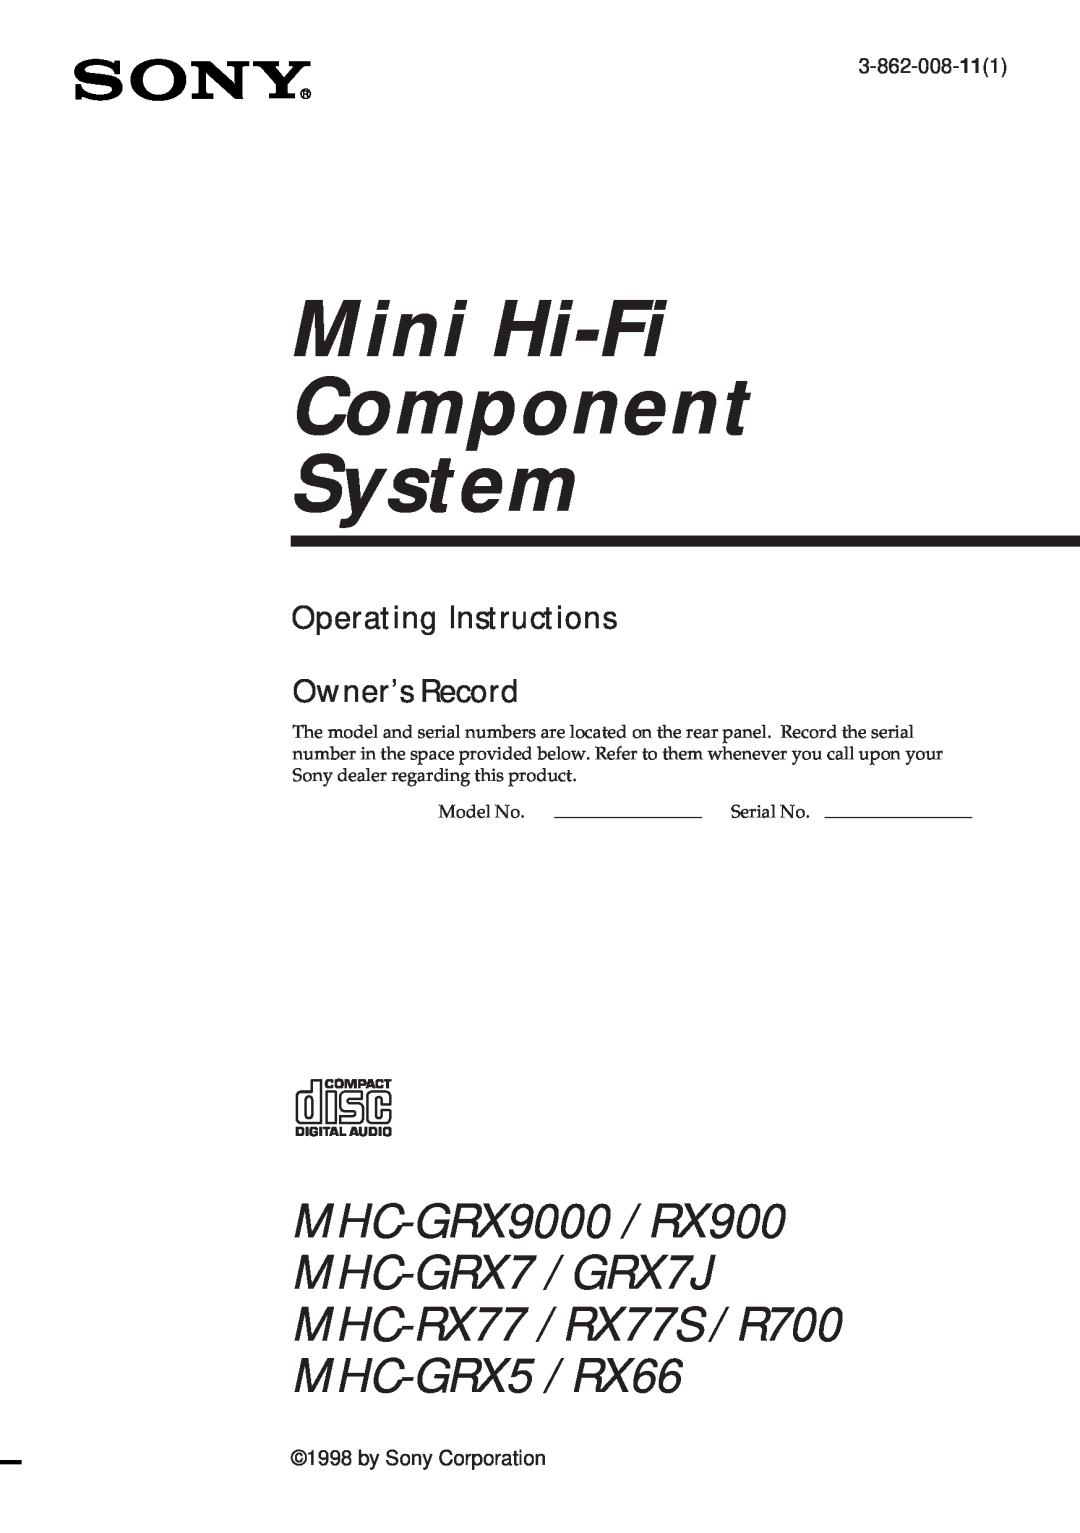 Sony MHC-GRX9000 operating instructions Mini Hi-Fi Component System, Operating Instructions Owner’s Record, 3-862-008-111 